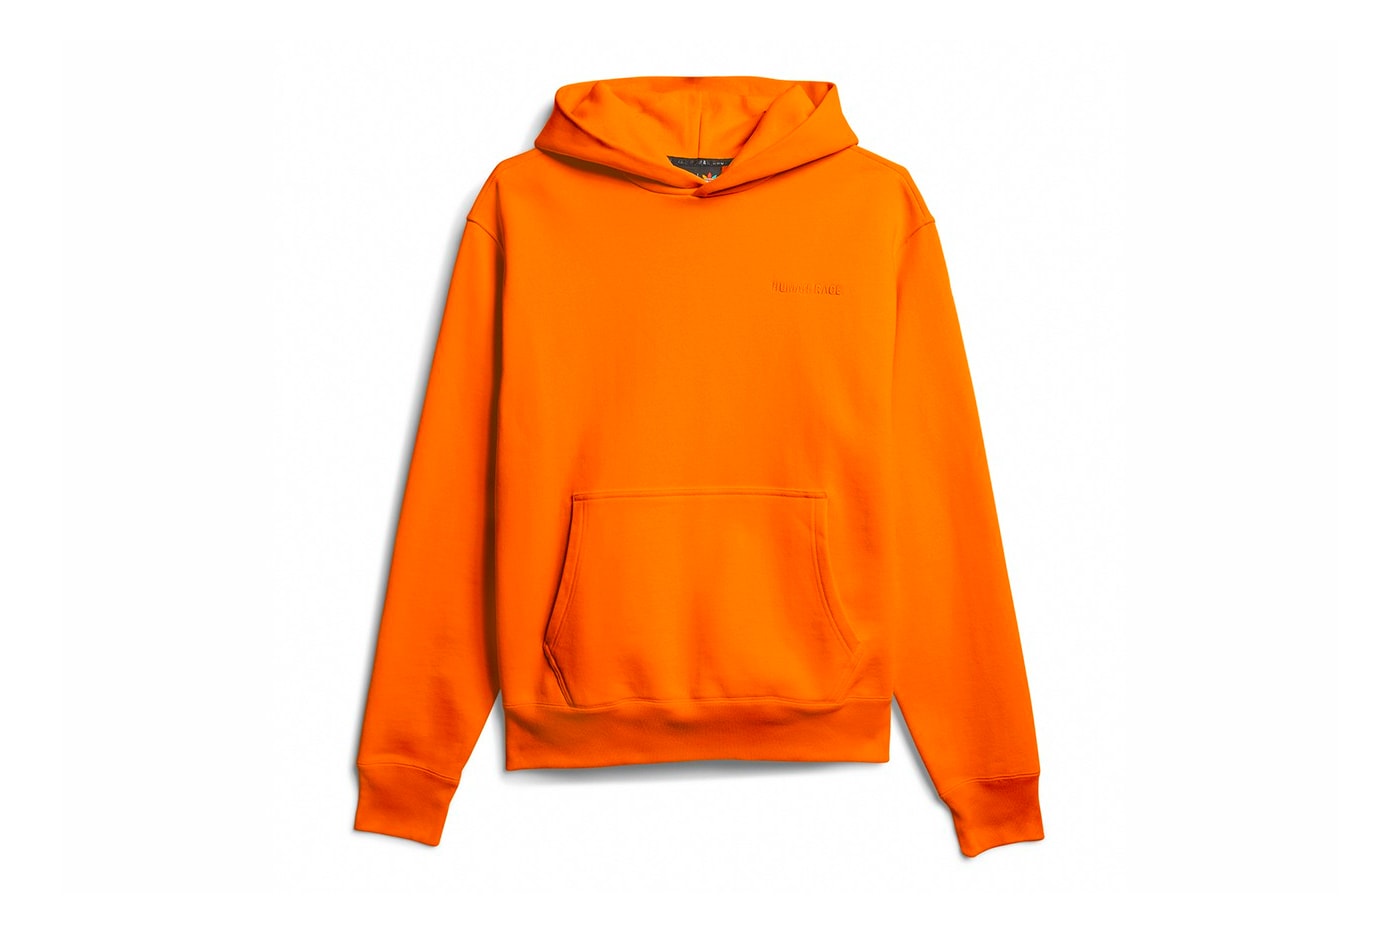 pharrell williams adidas originals basics line hoodies sweats shorts loungewear release info